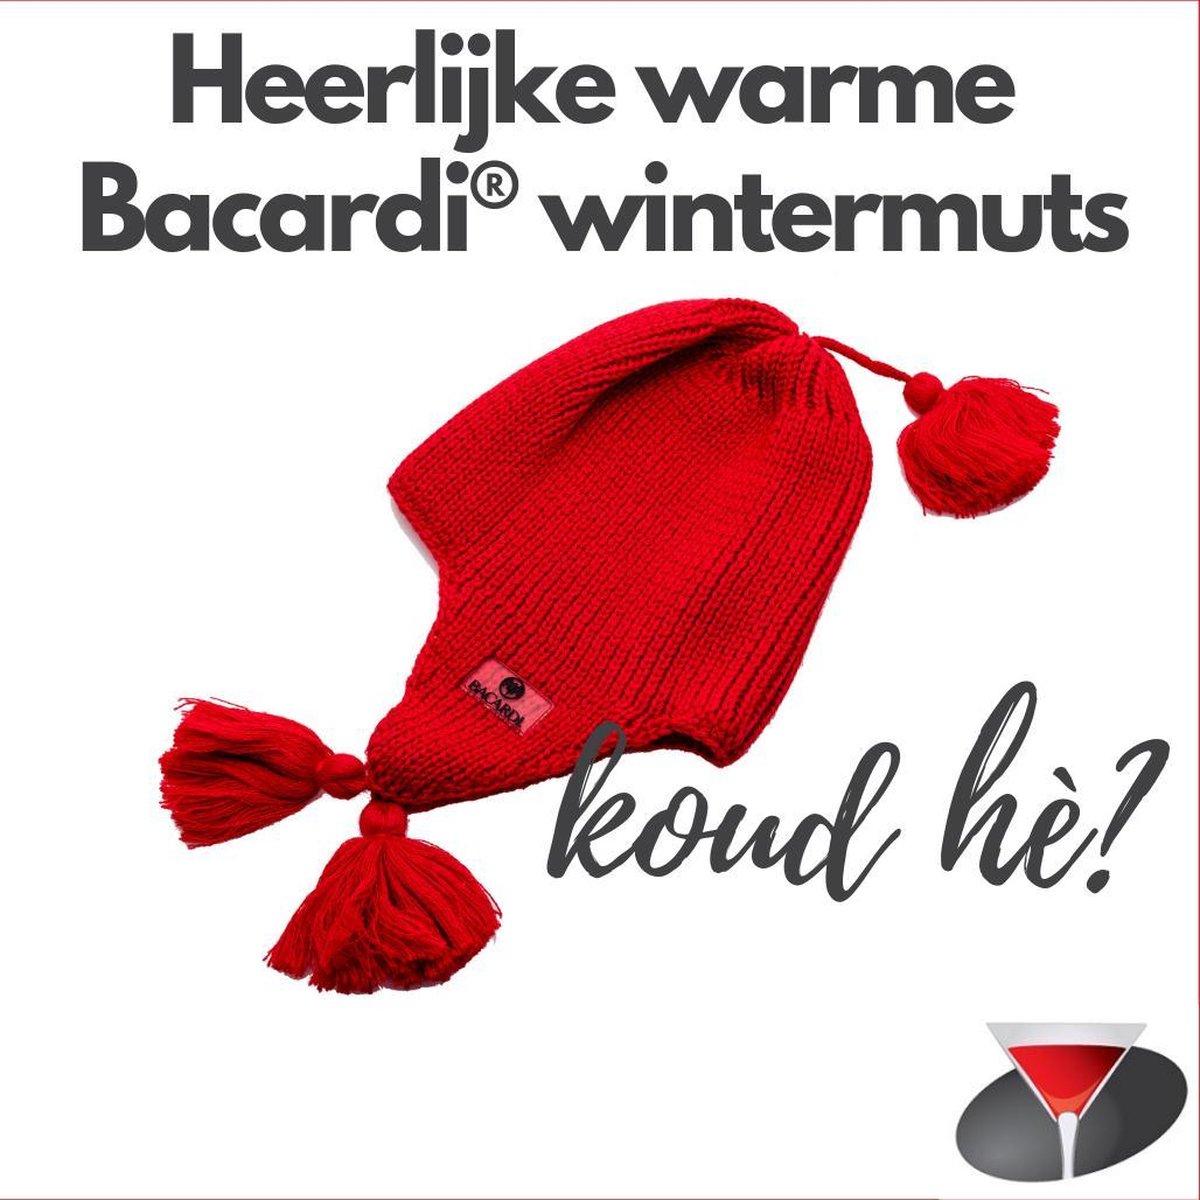 Heerlijke warme Bacardi wintermuts